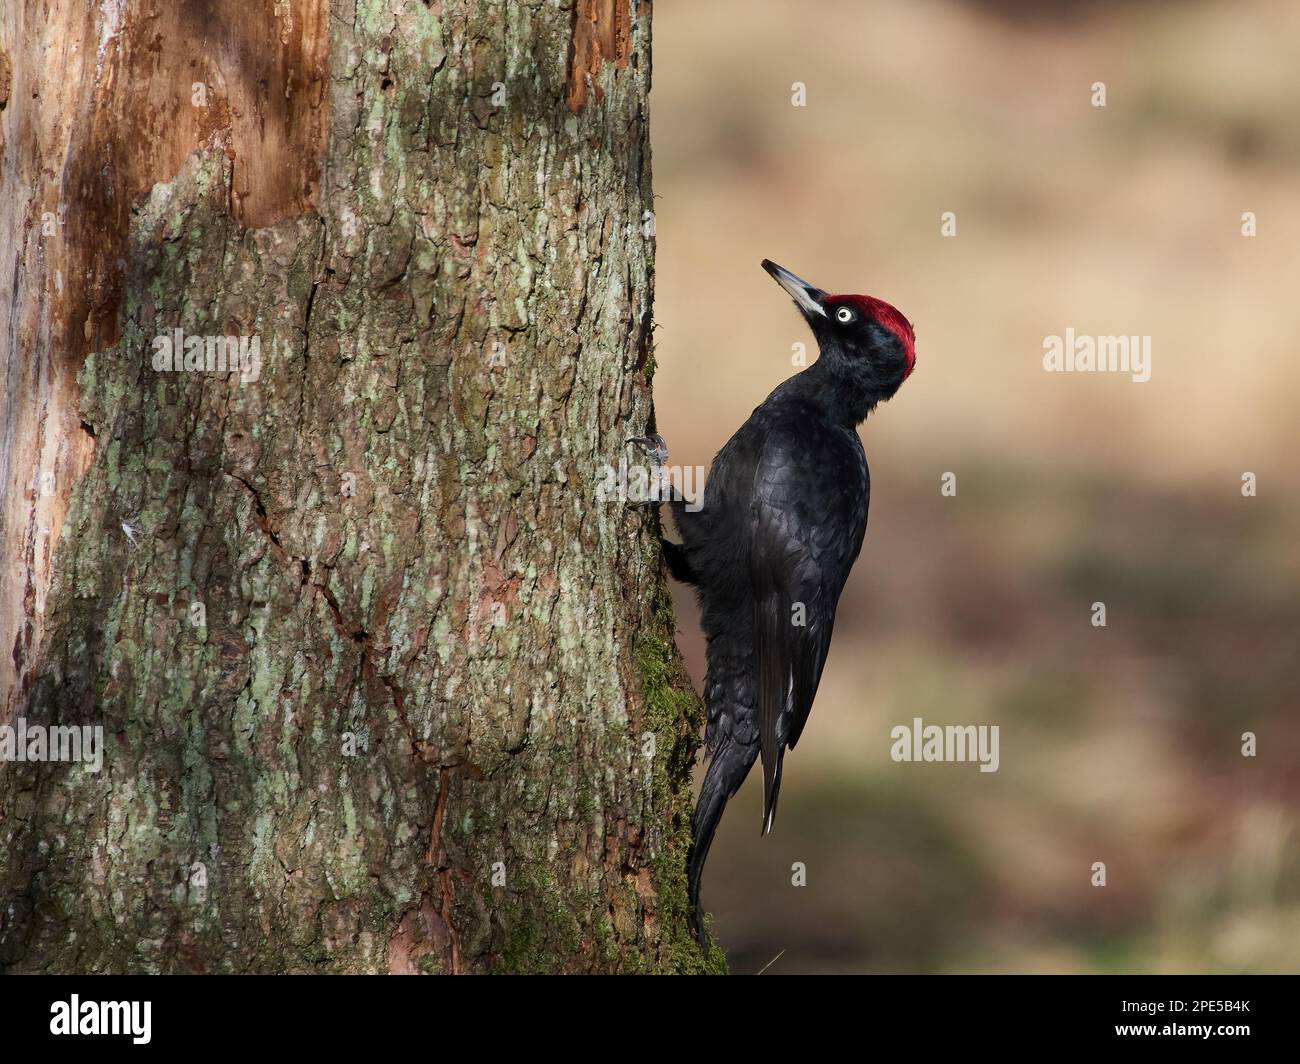 Black woodpecker (Dryocopus martius) in its natural environment Stock Photo